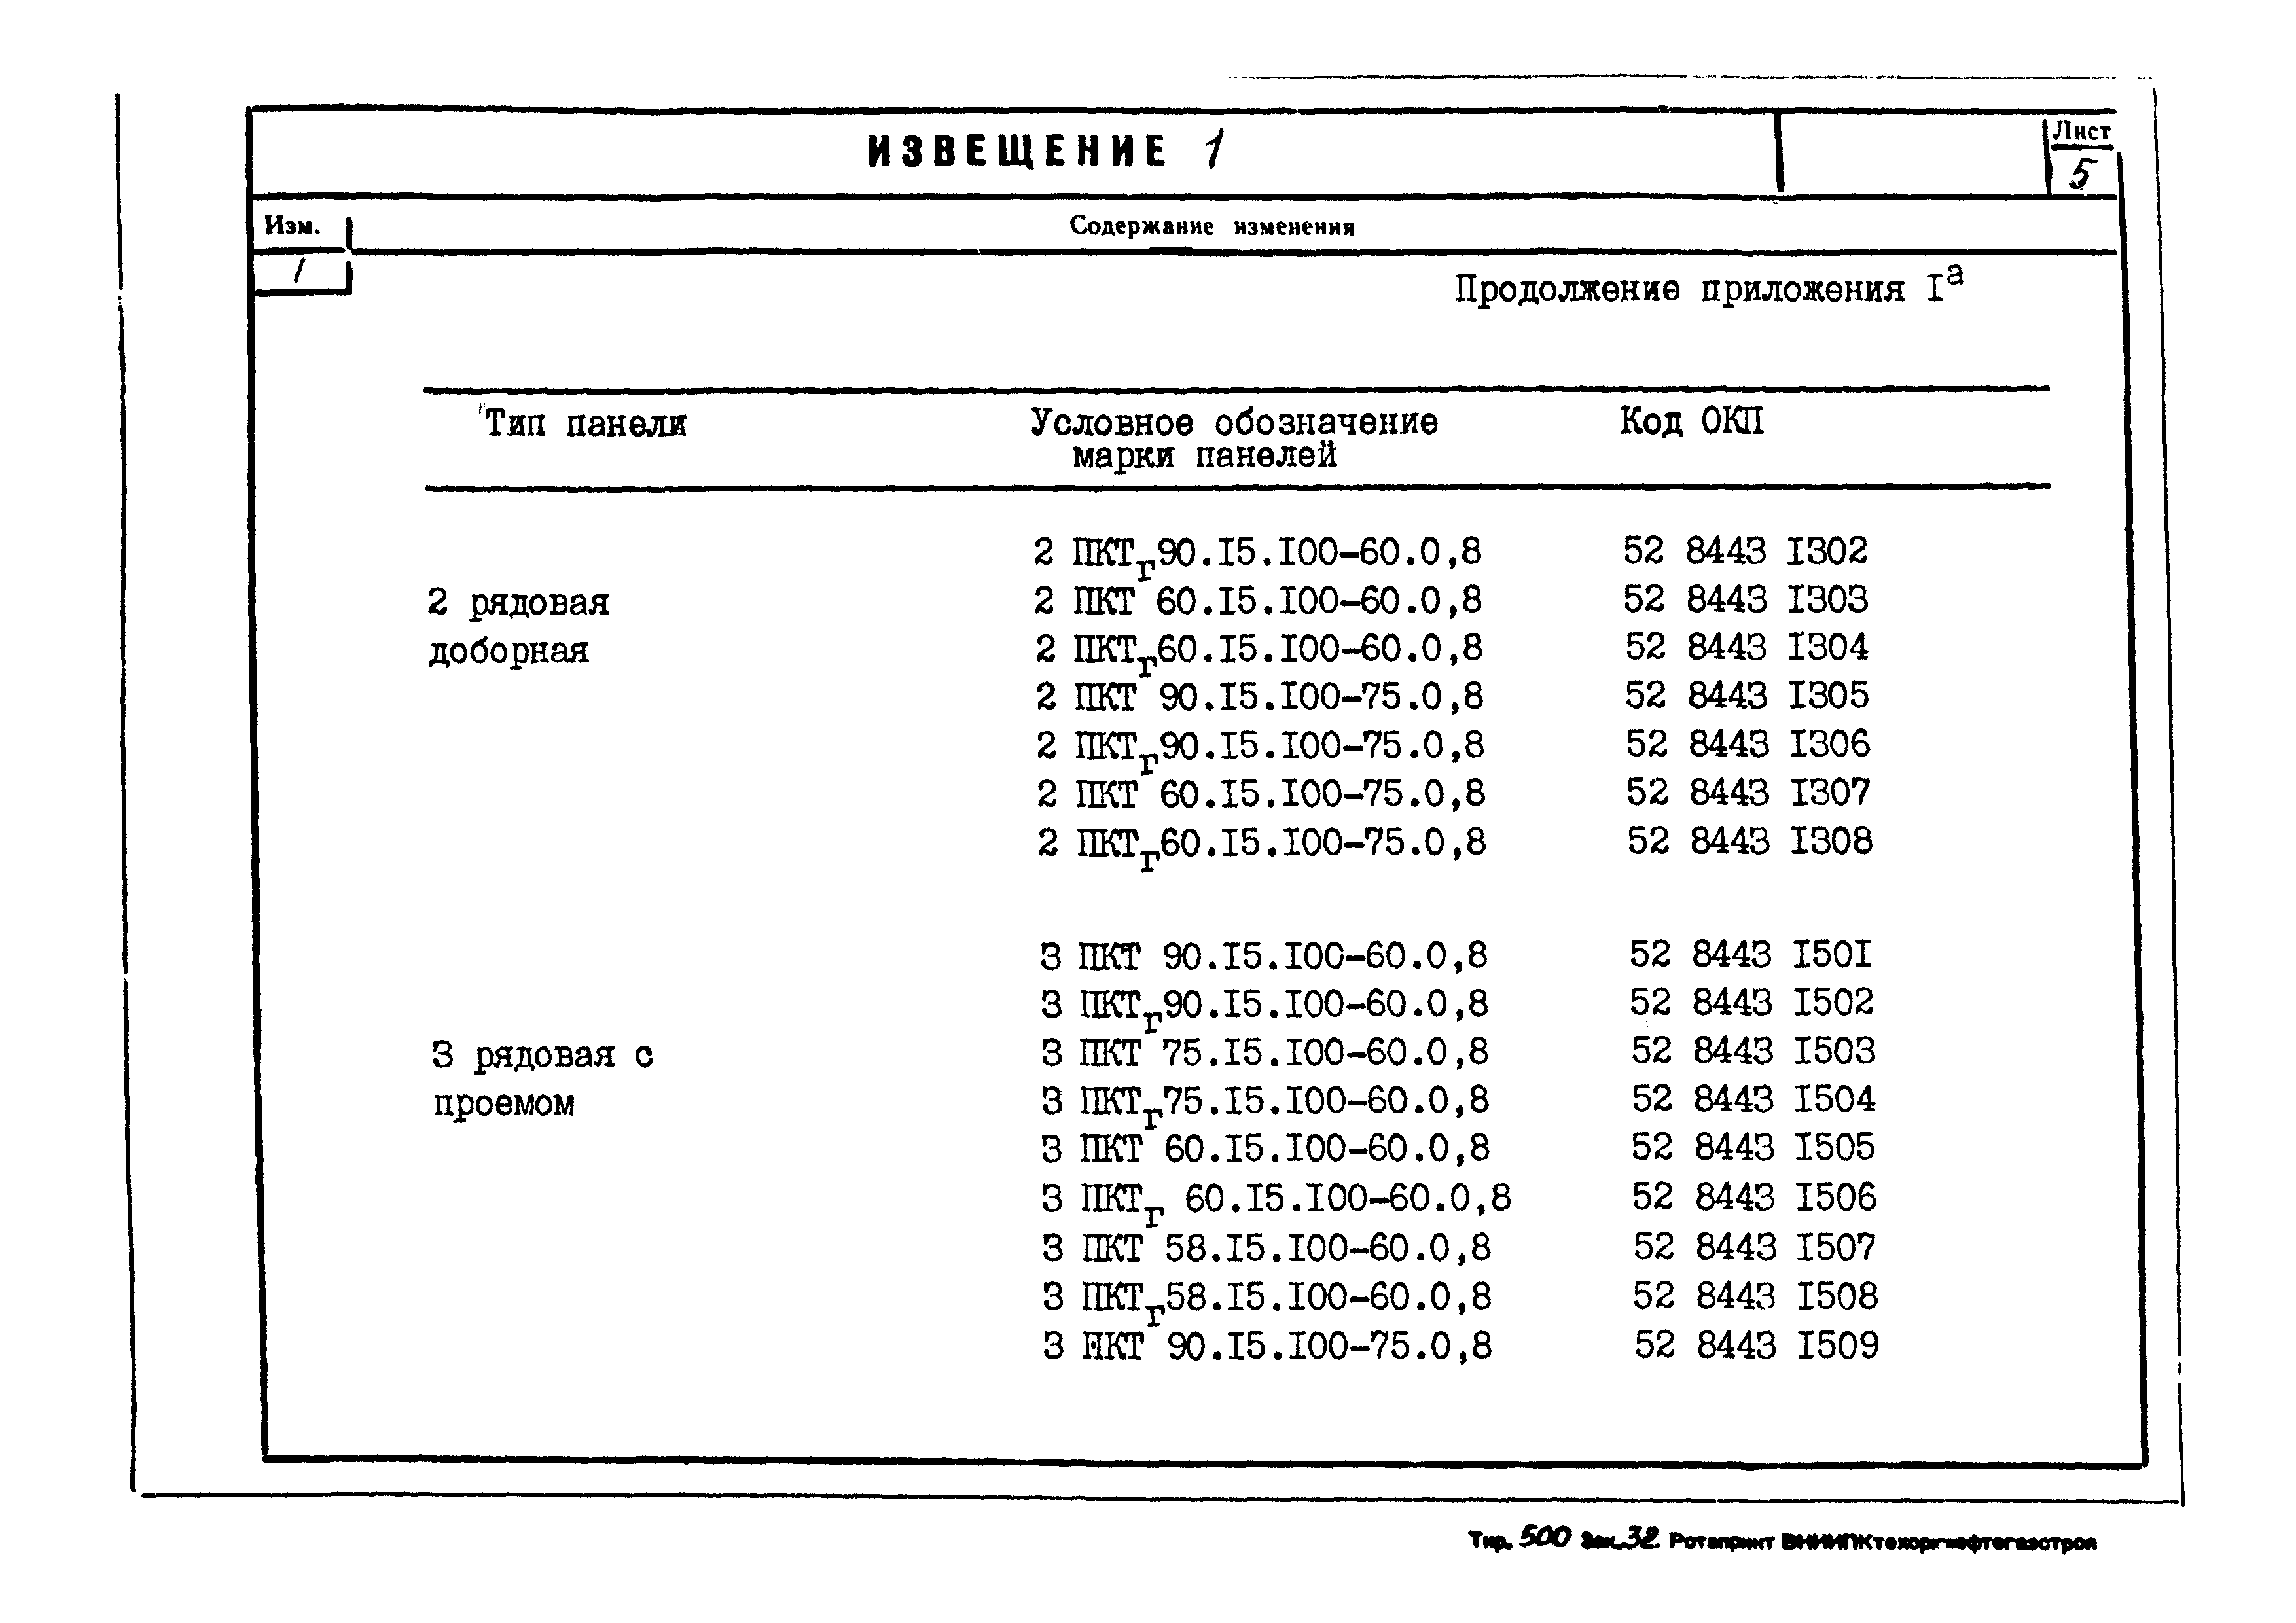 ТУ 102-463-88